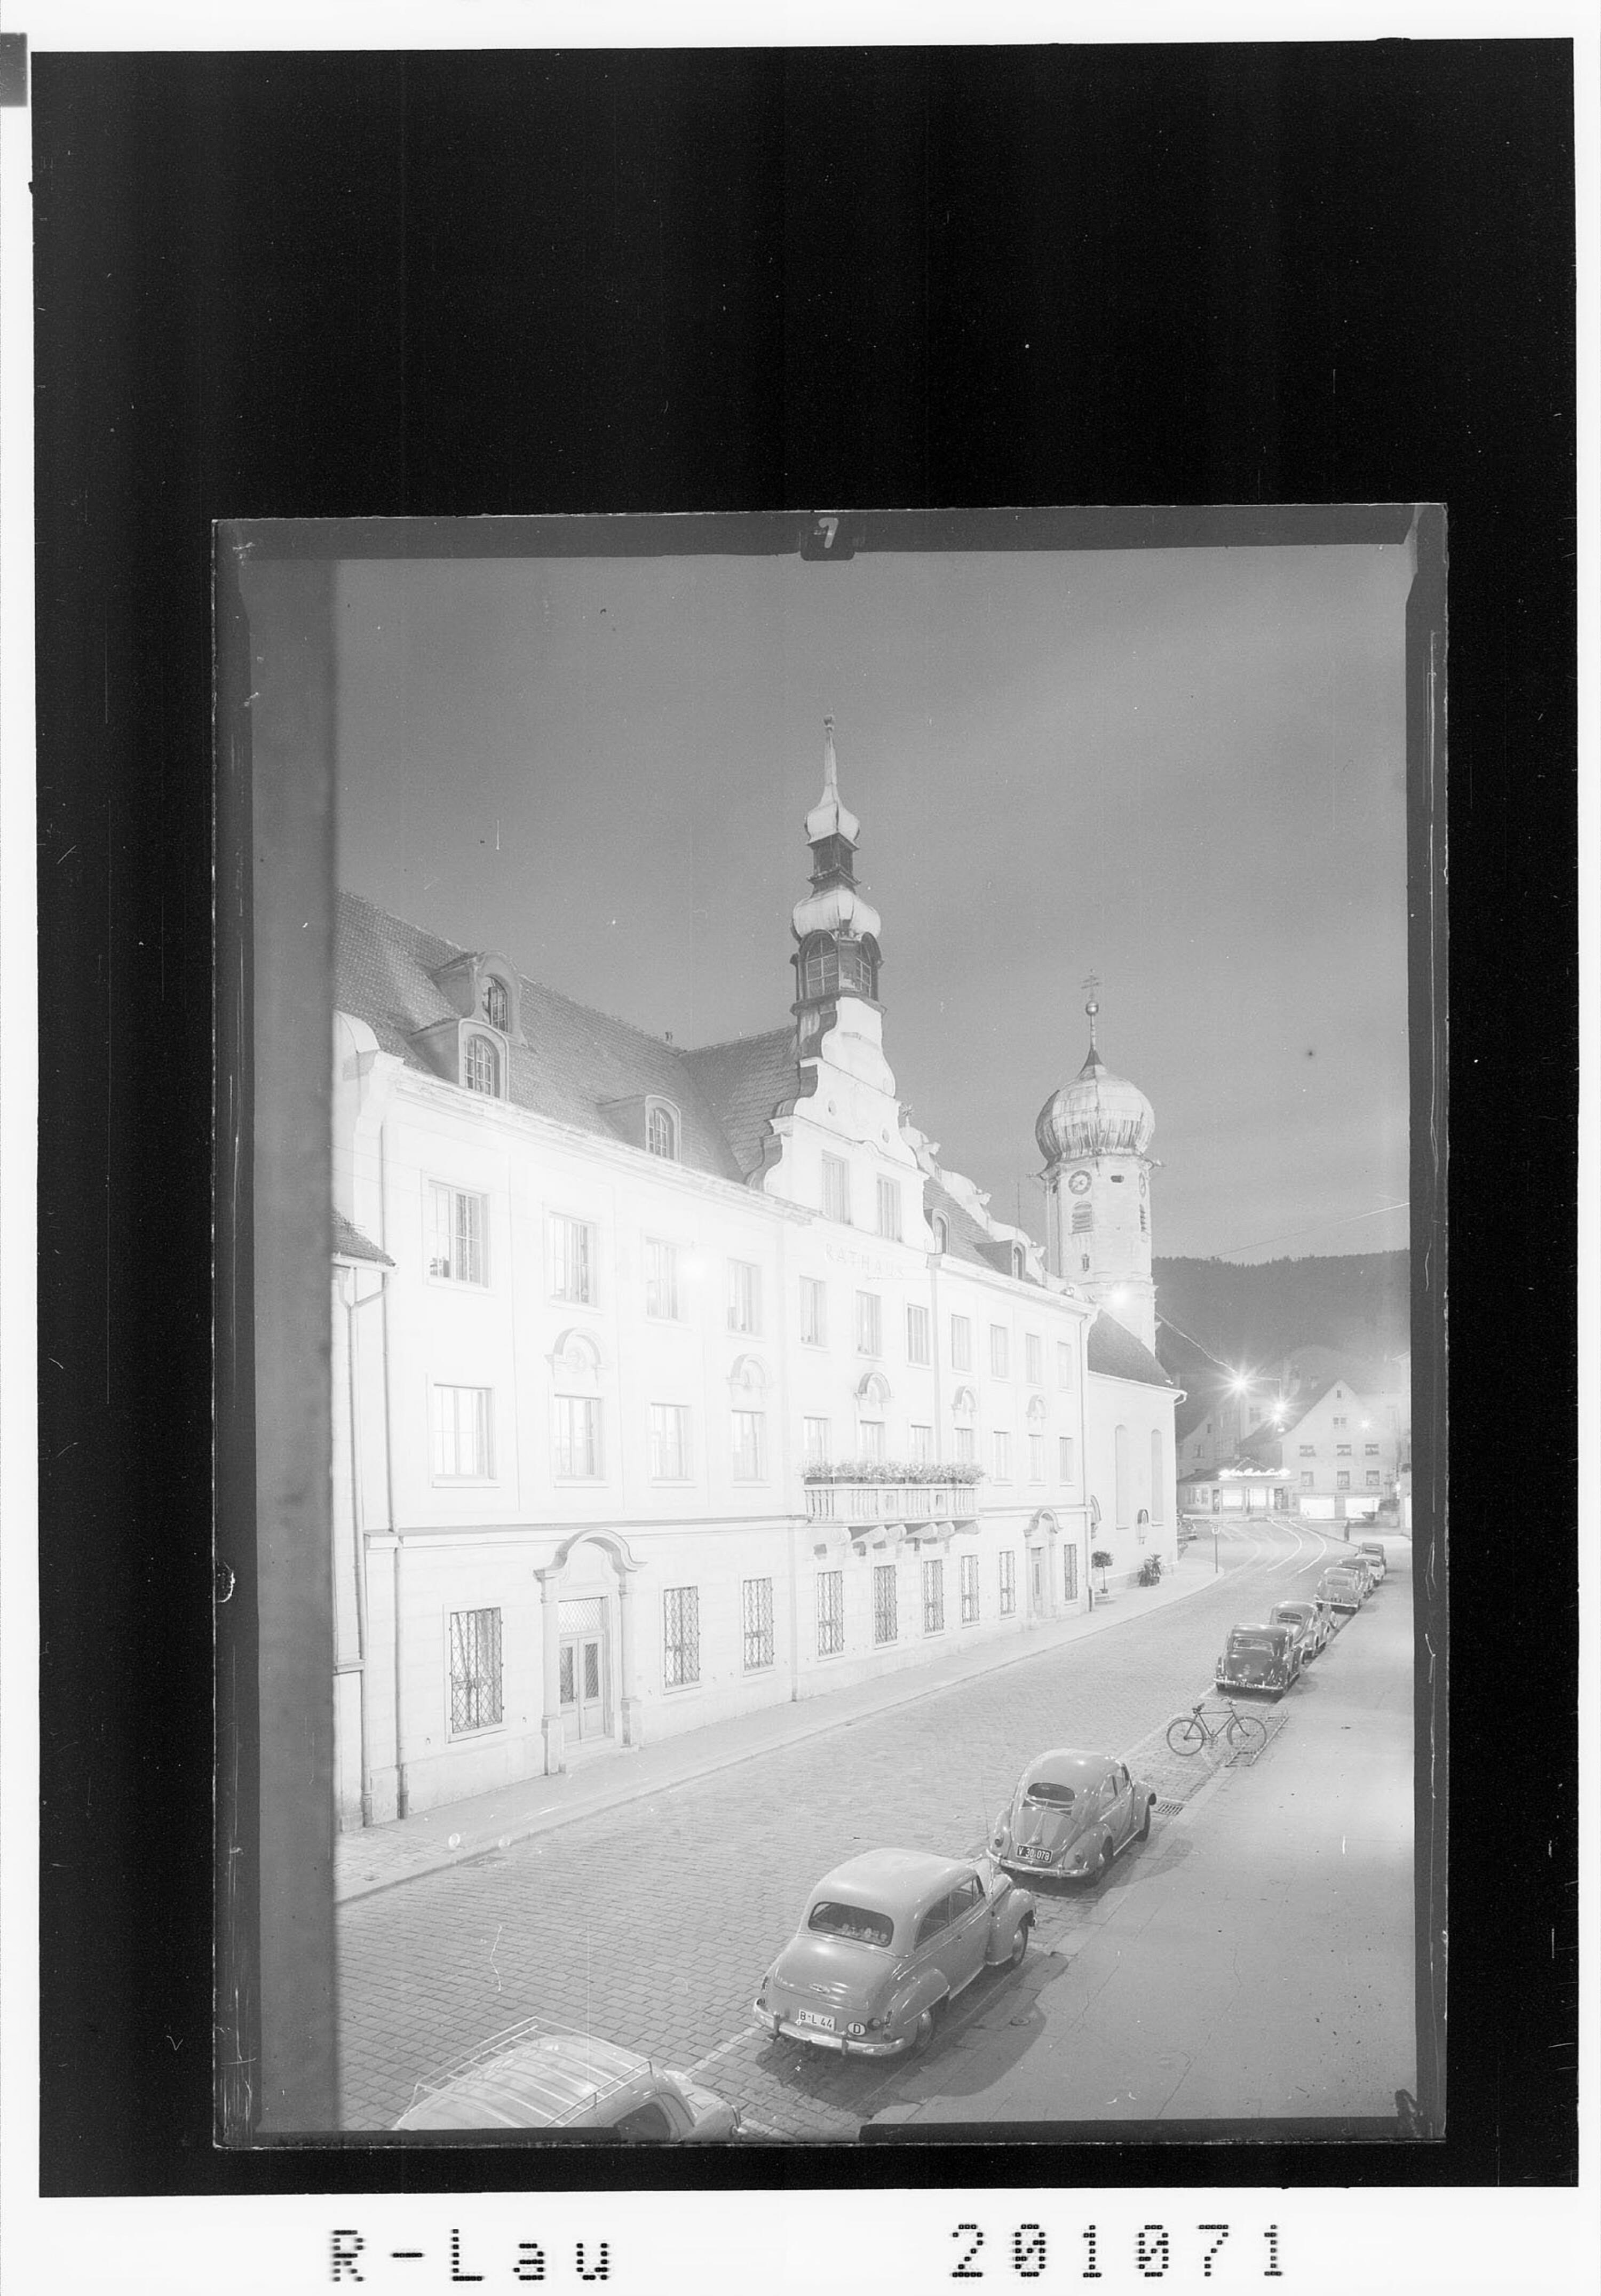 Bregenz / Rathaus mit Seekapelle bei Nacht></div>


    <hr>
    <div class=